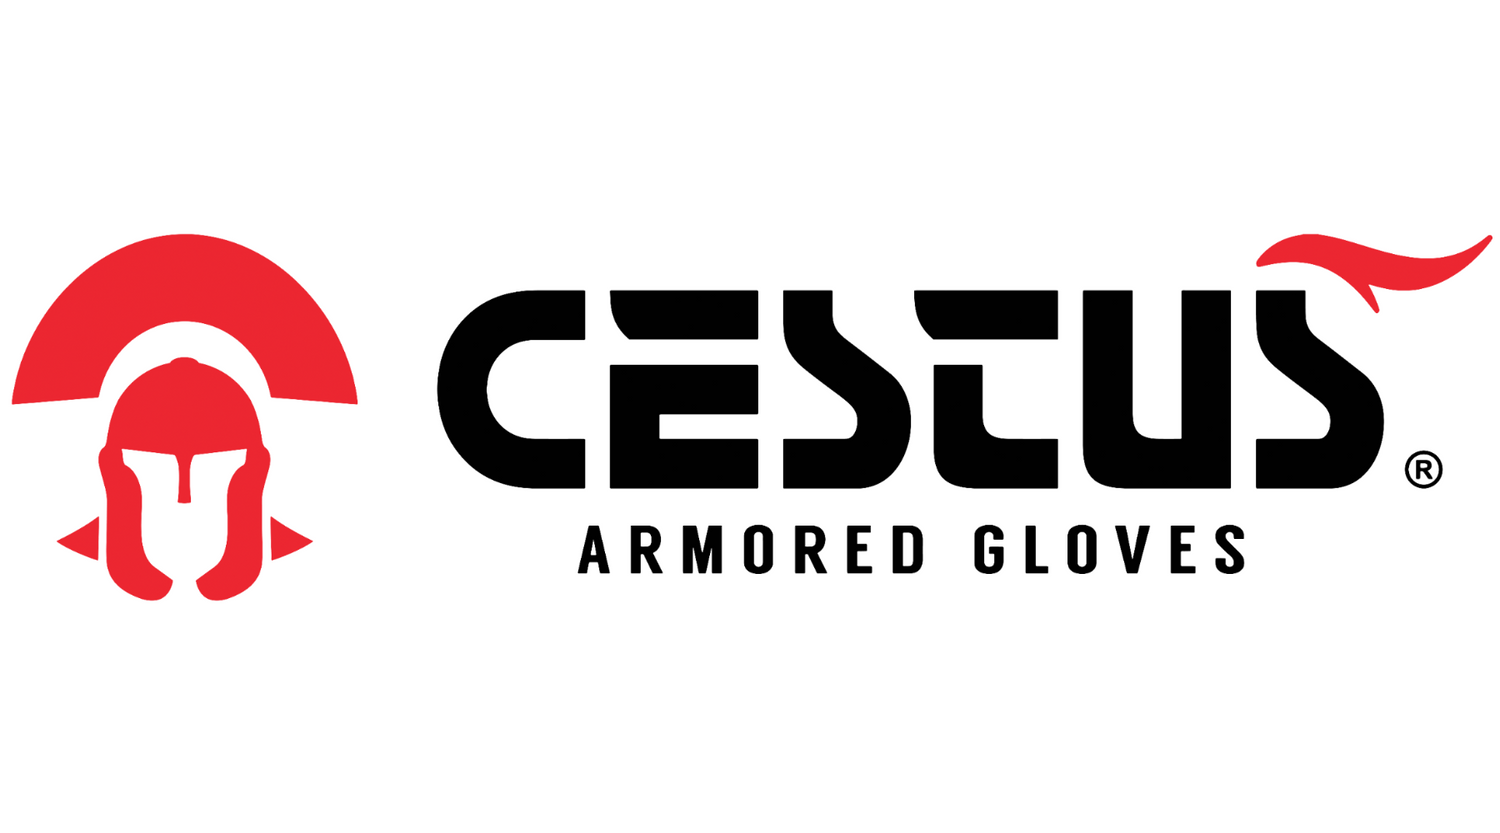 Cestus Armored Gloves